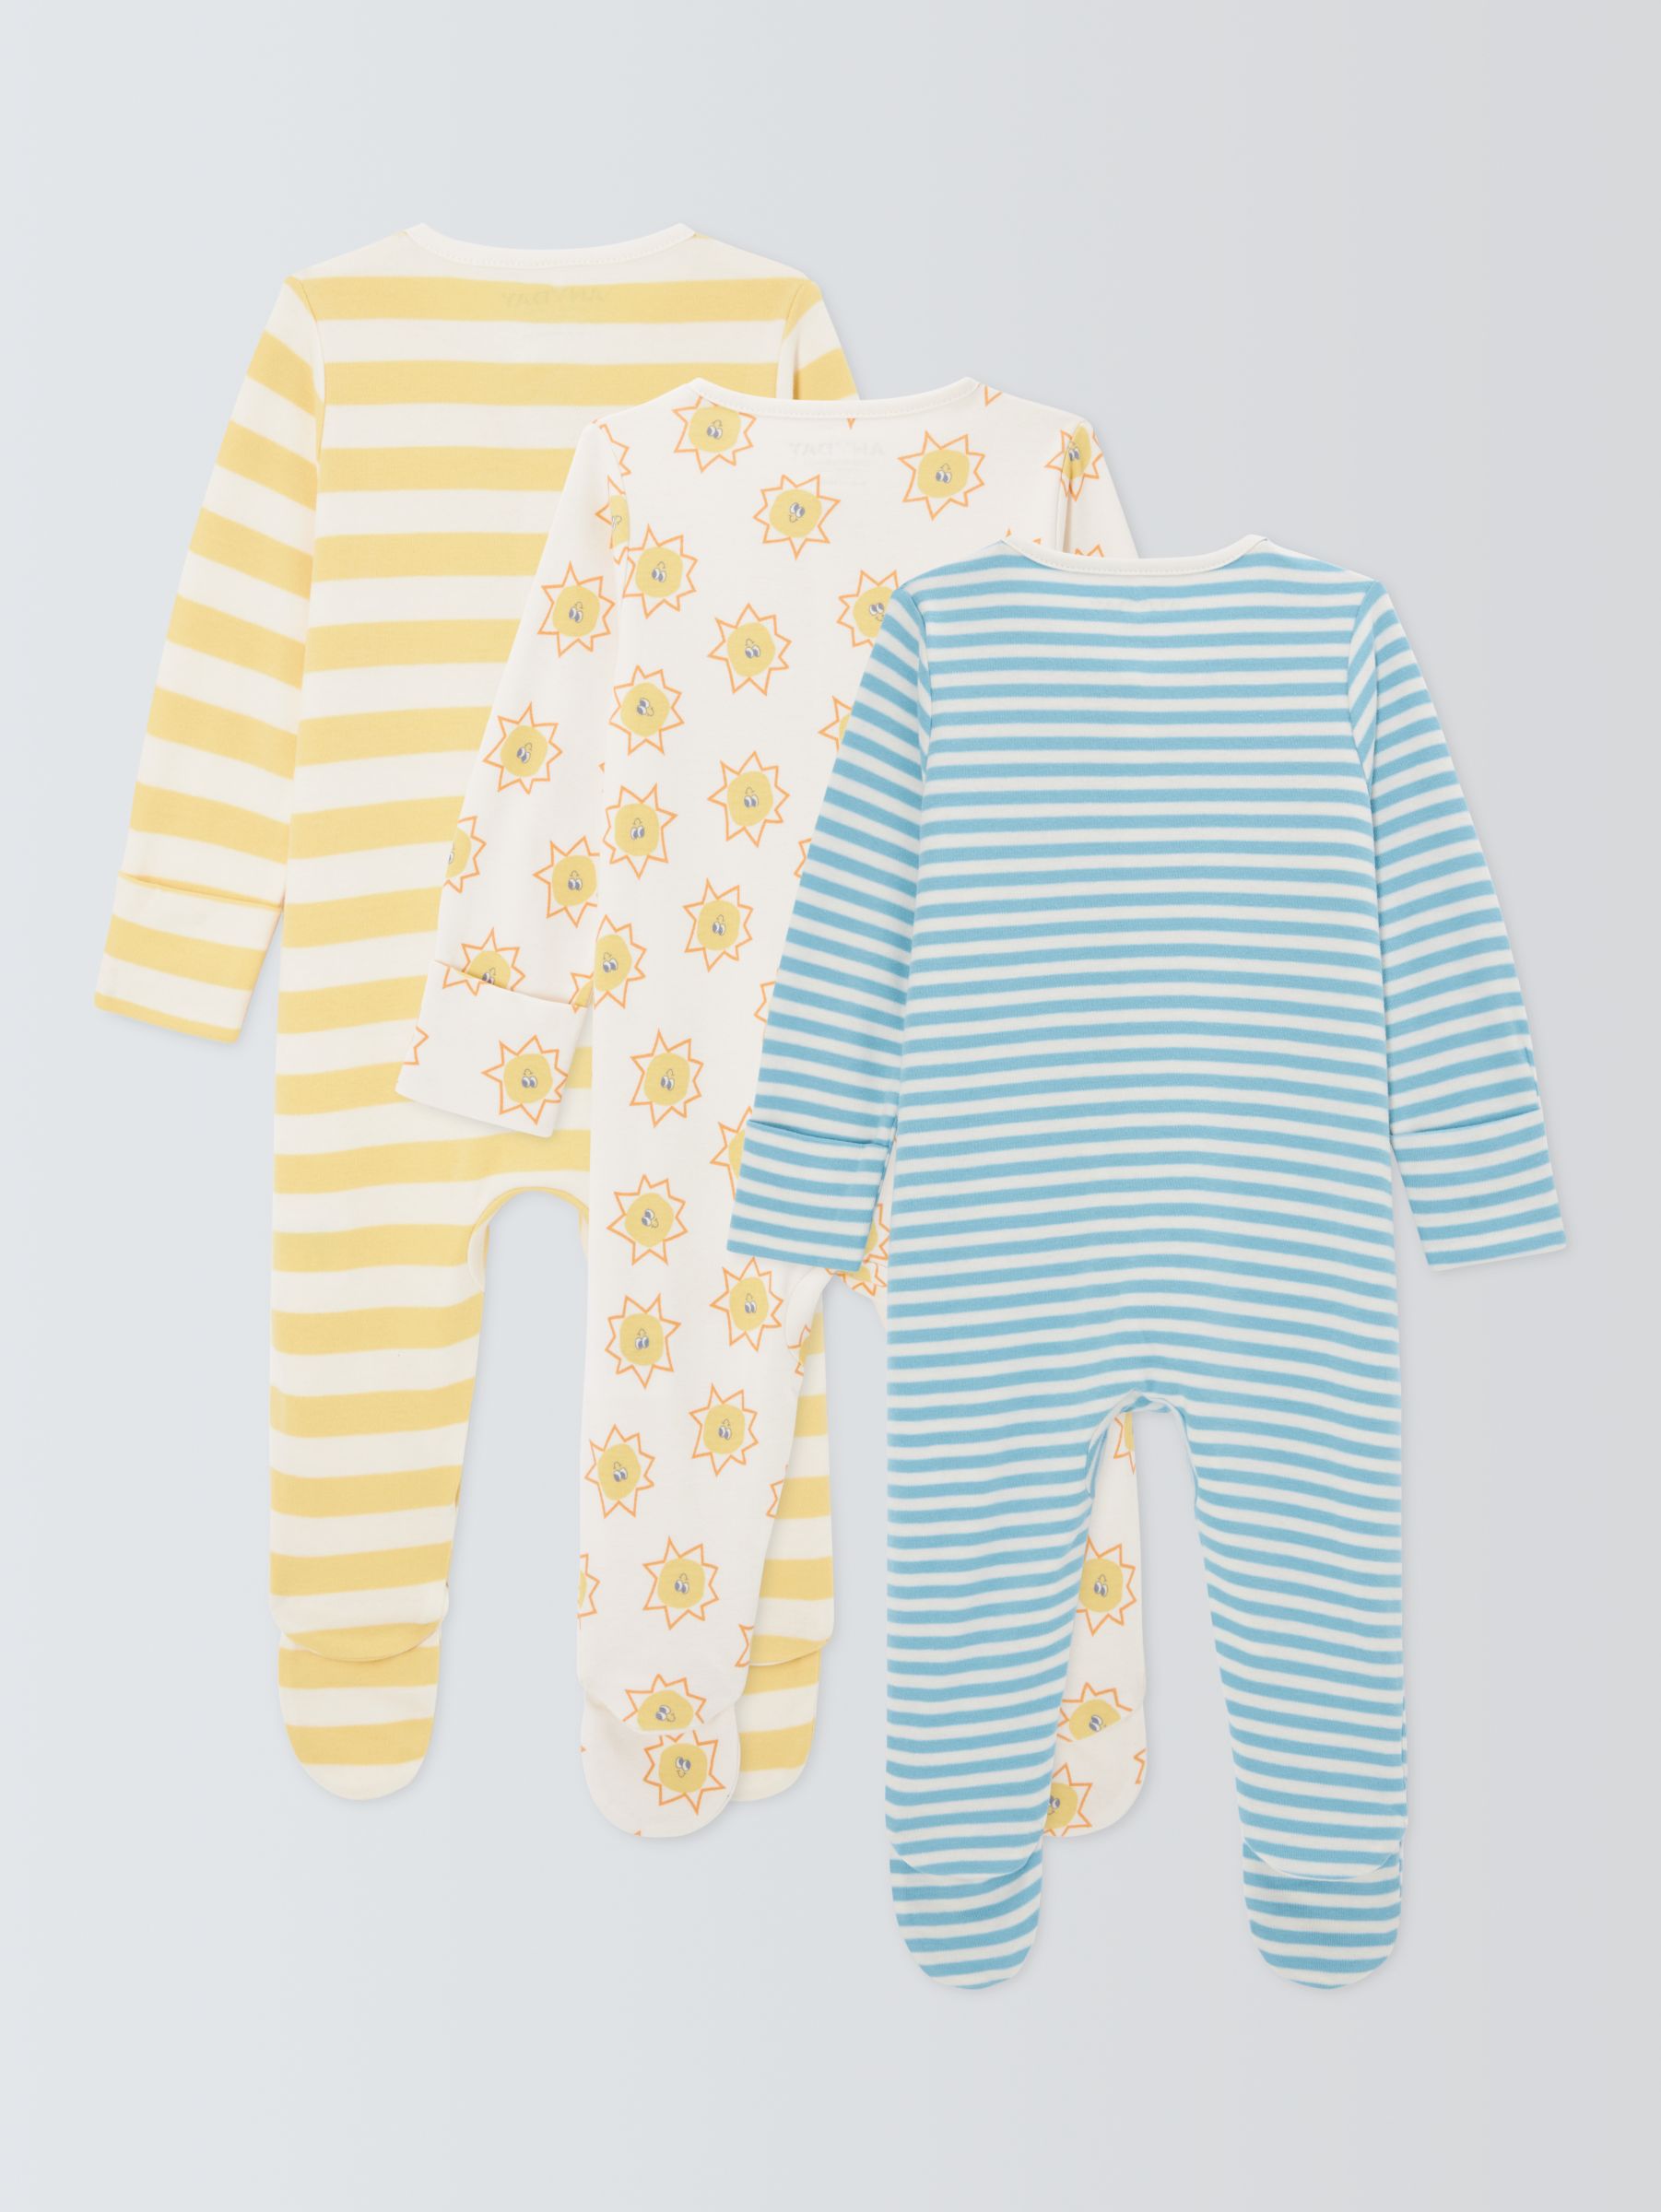 John Lewis ANYDAY Baby Printed Sleepsuit, Pack of 3, Multi, 6-9 months